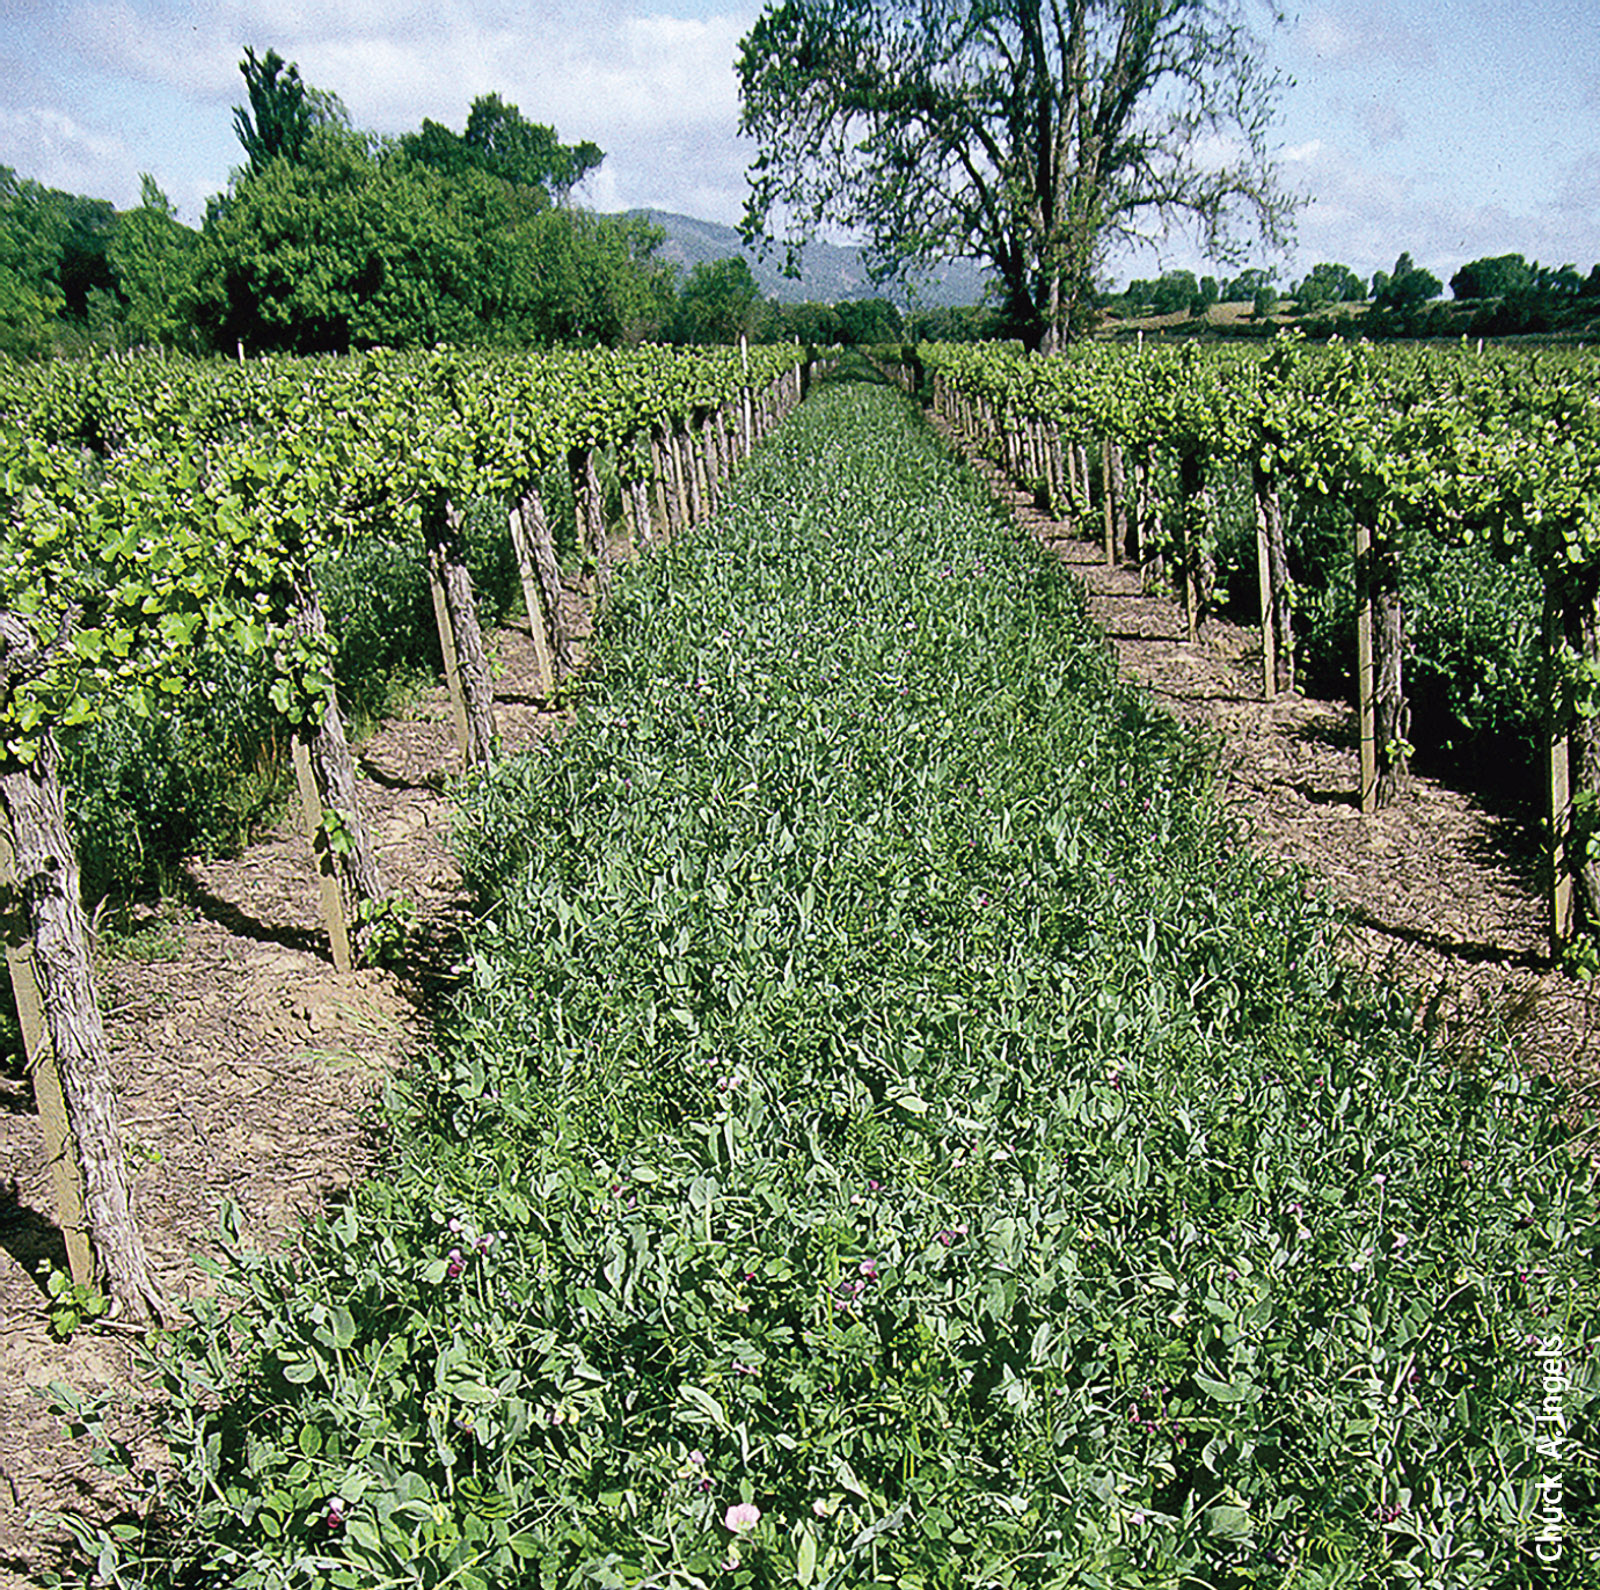 A vetch-pea cover crop in Mendocino County.